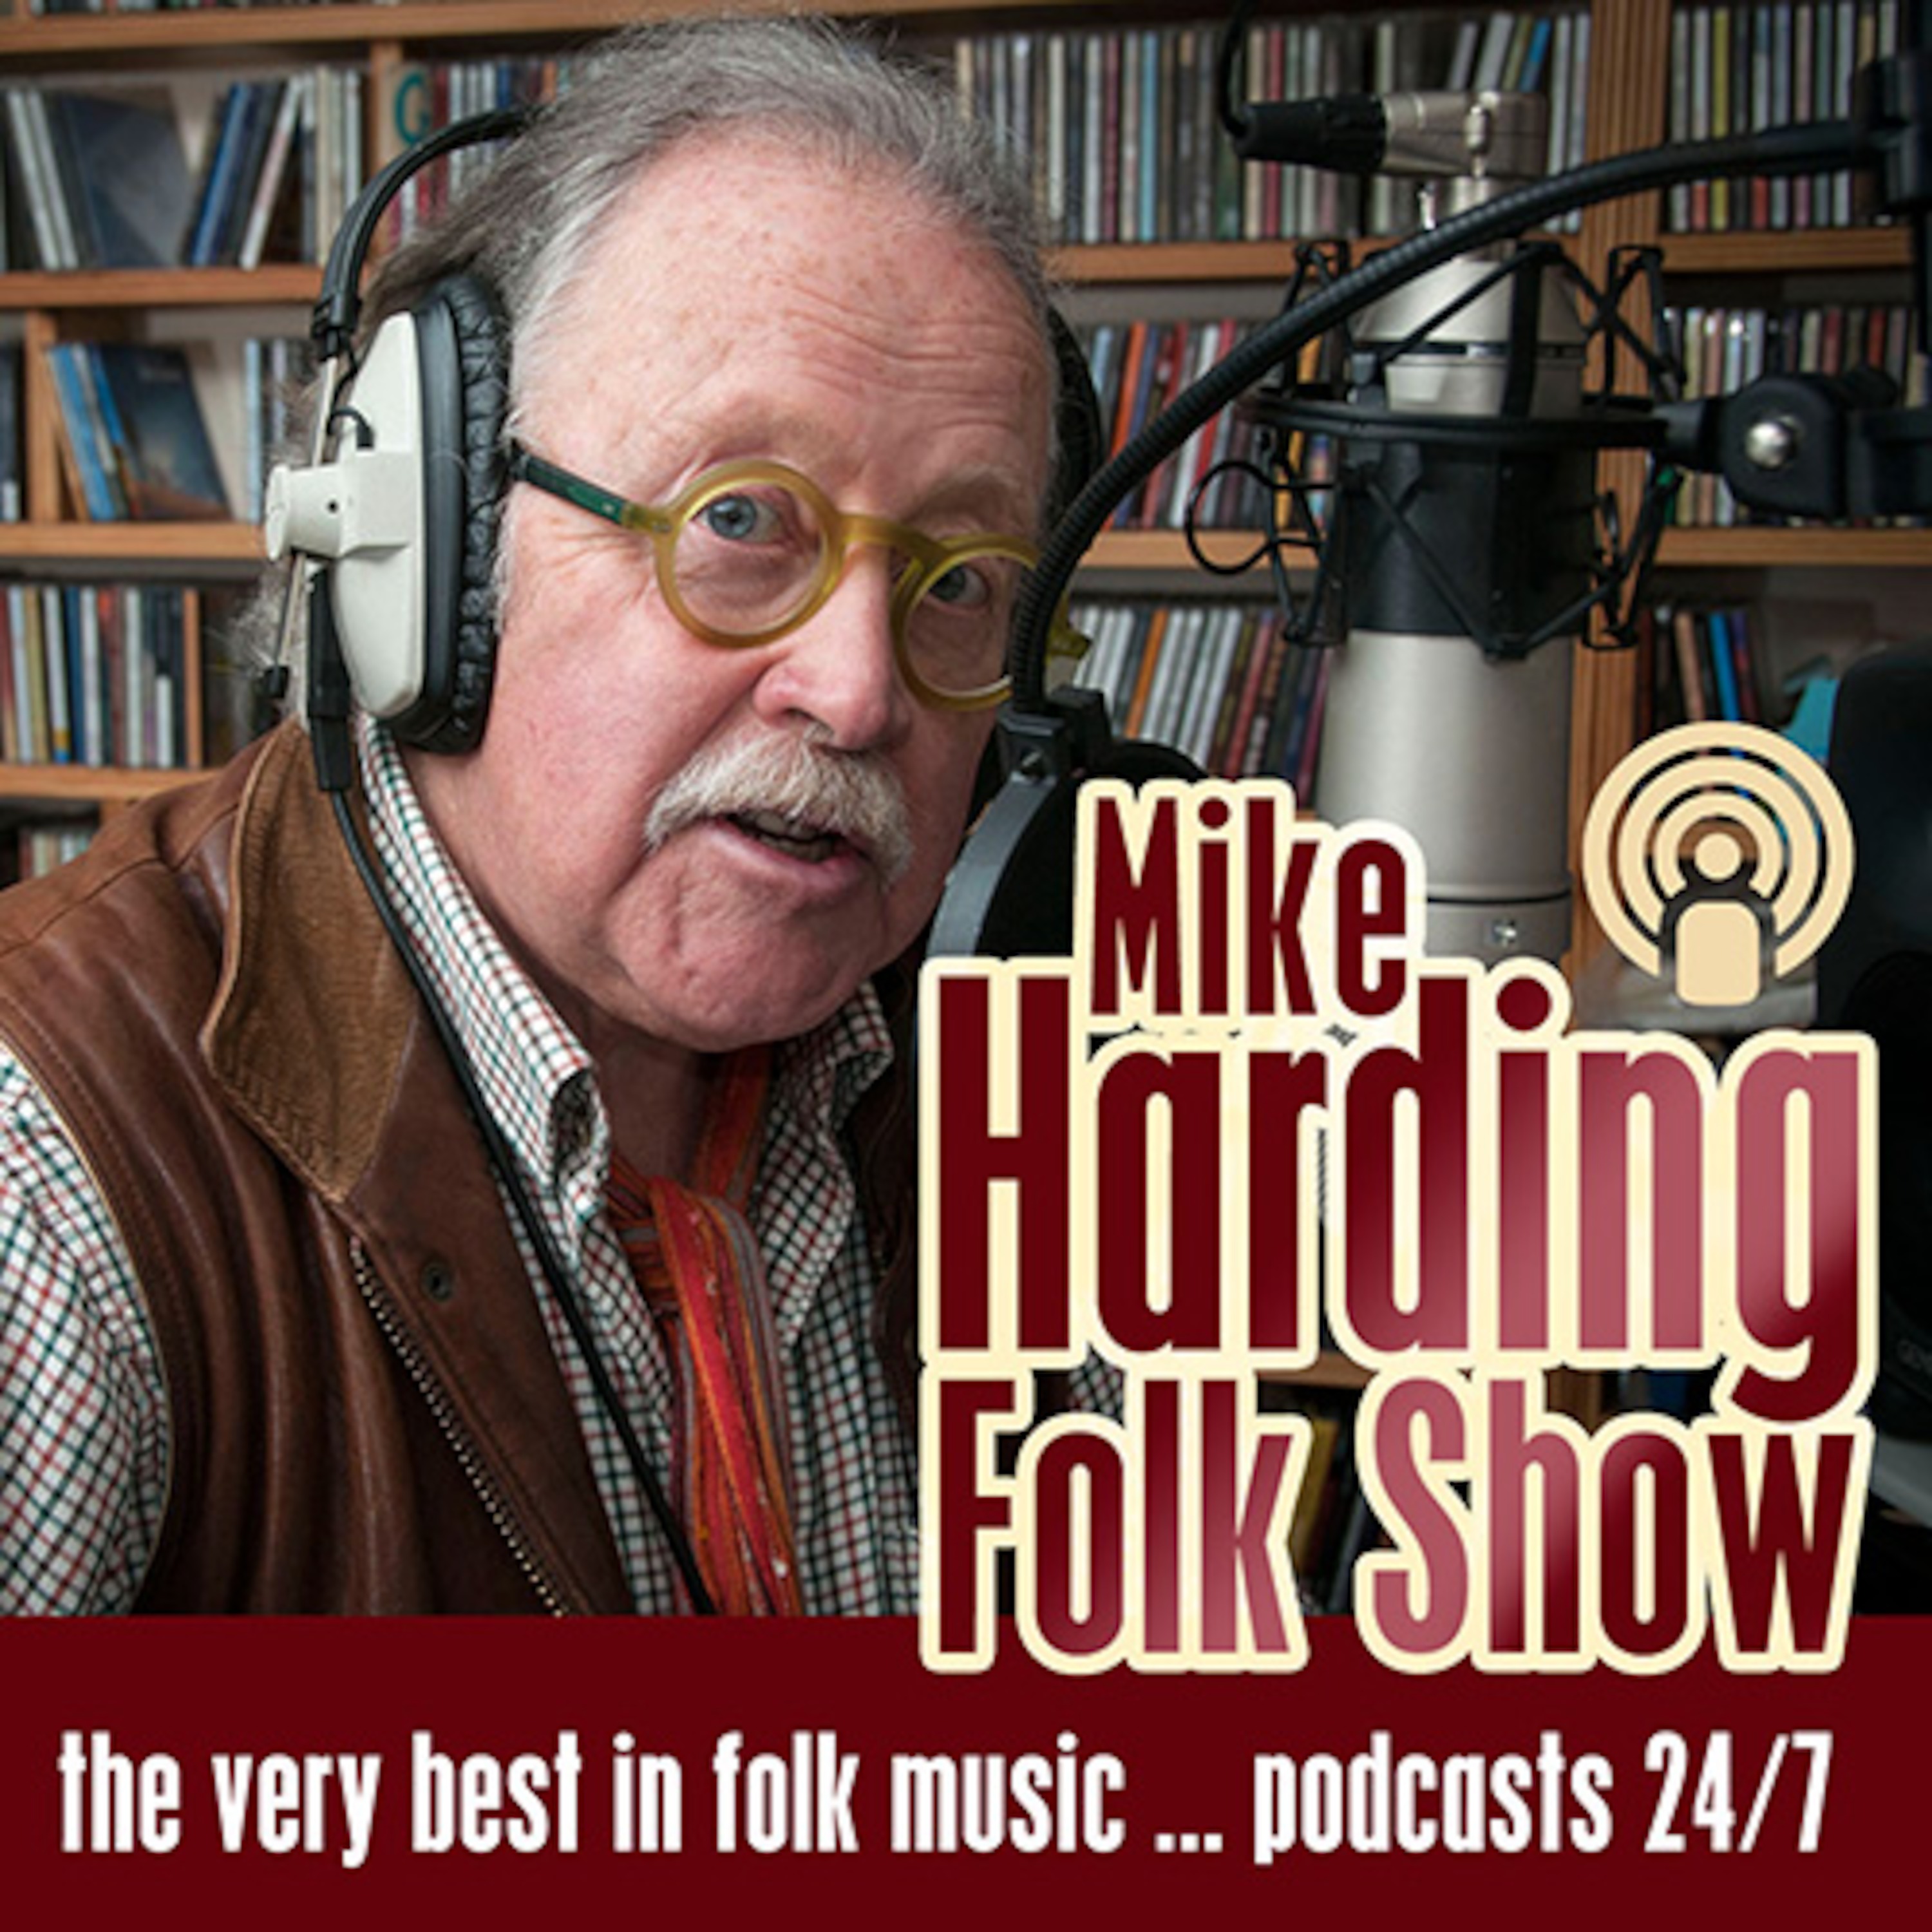 Mike Harding Folk Show 03